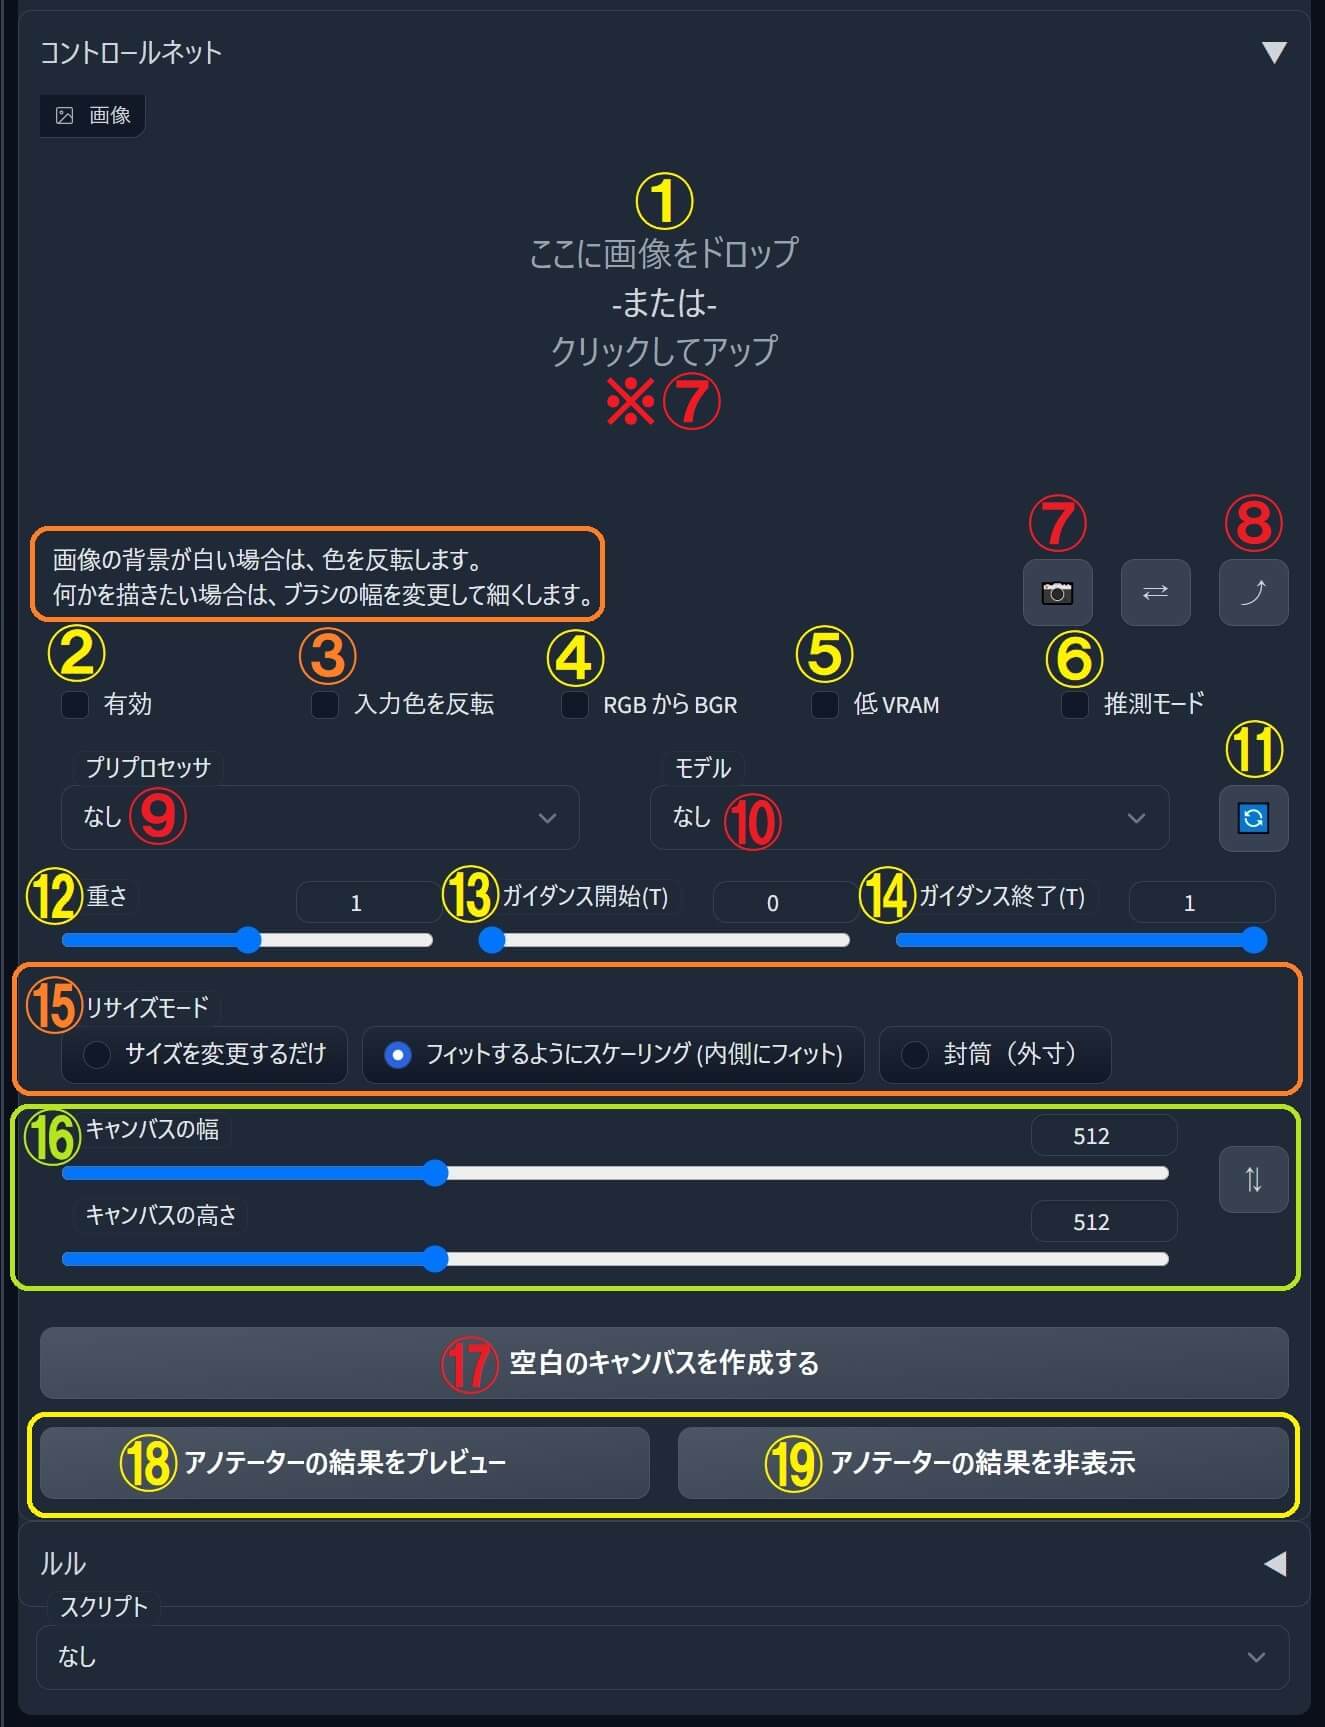 Stable Diffusion web UI-sd-webui-controlnet-interface-jp-NEW002a